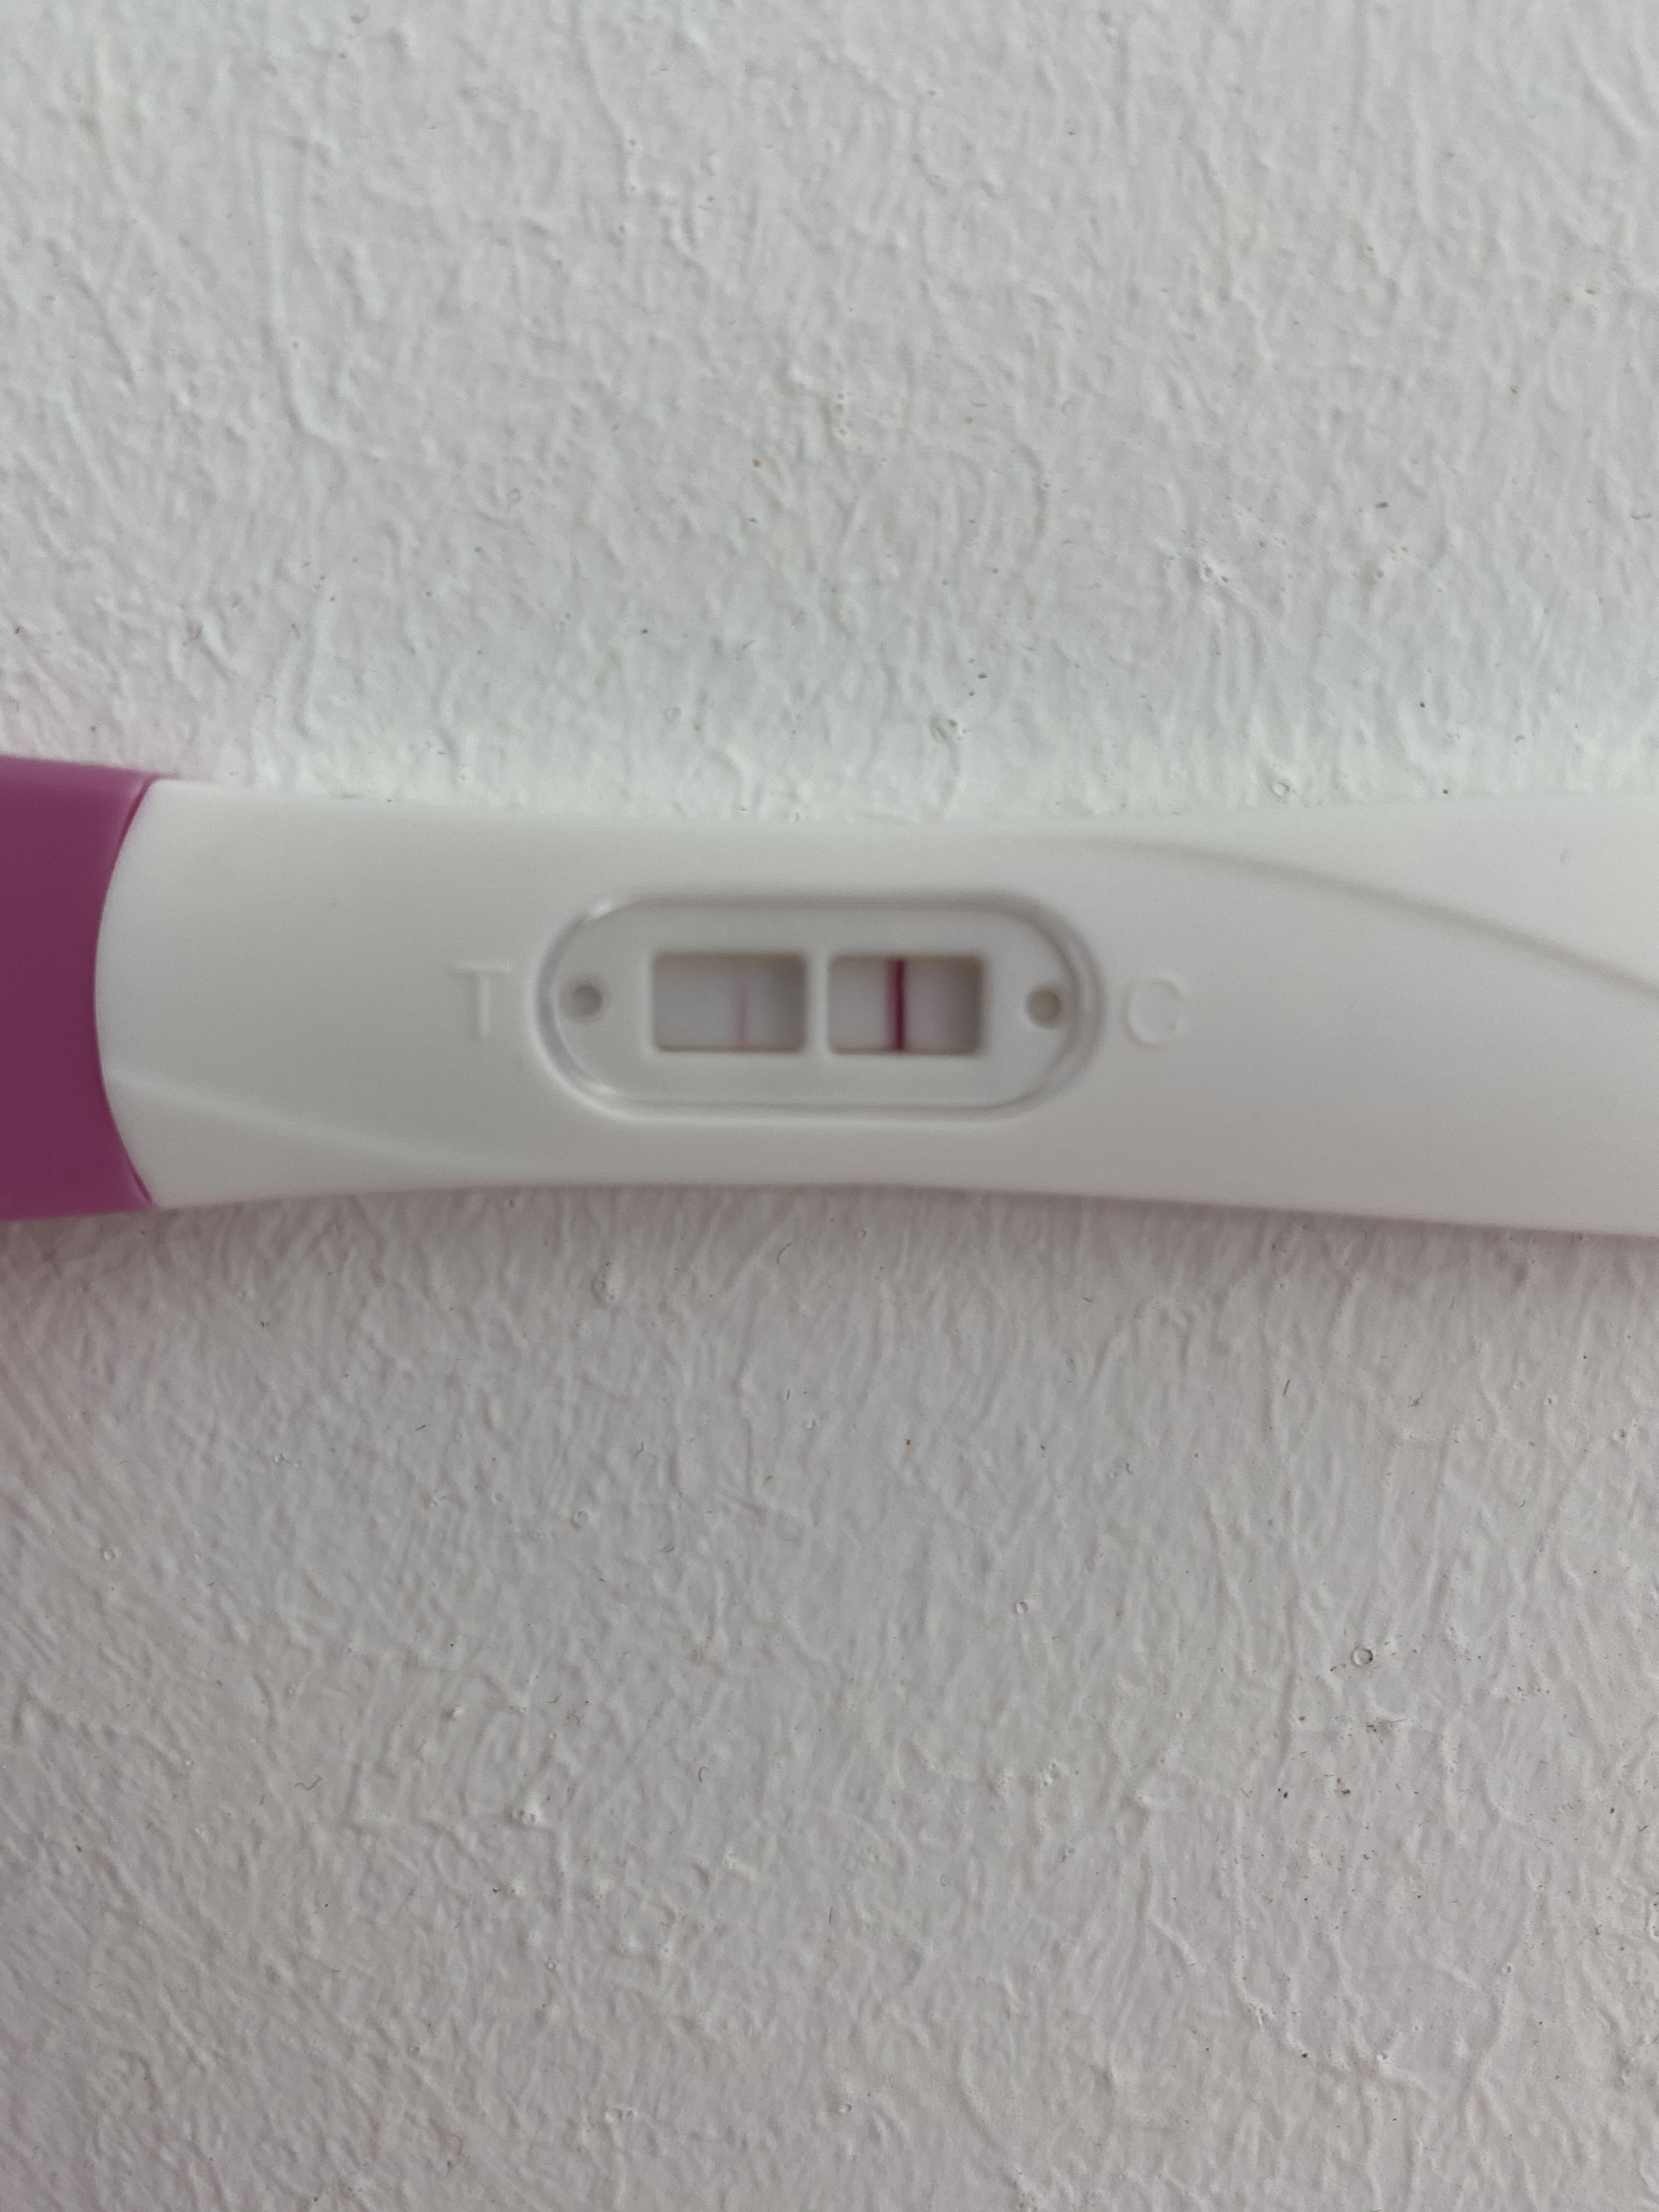 Positiv graviditetstest 